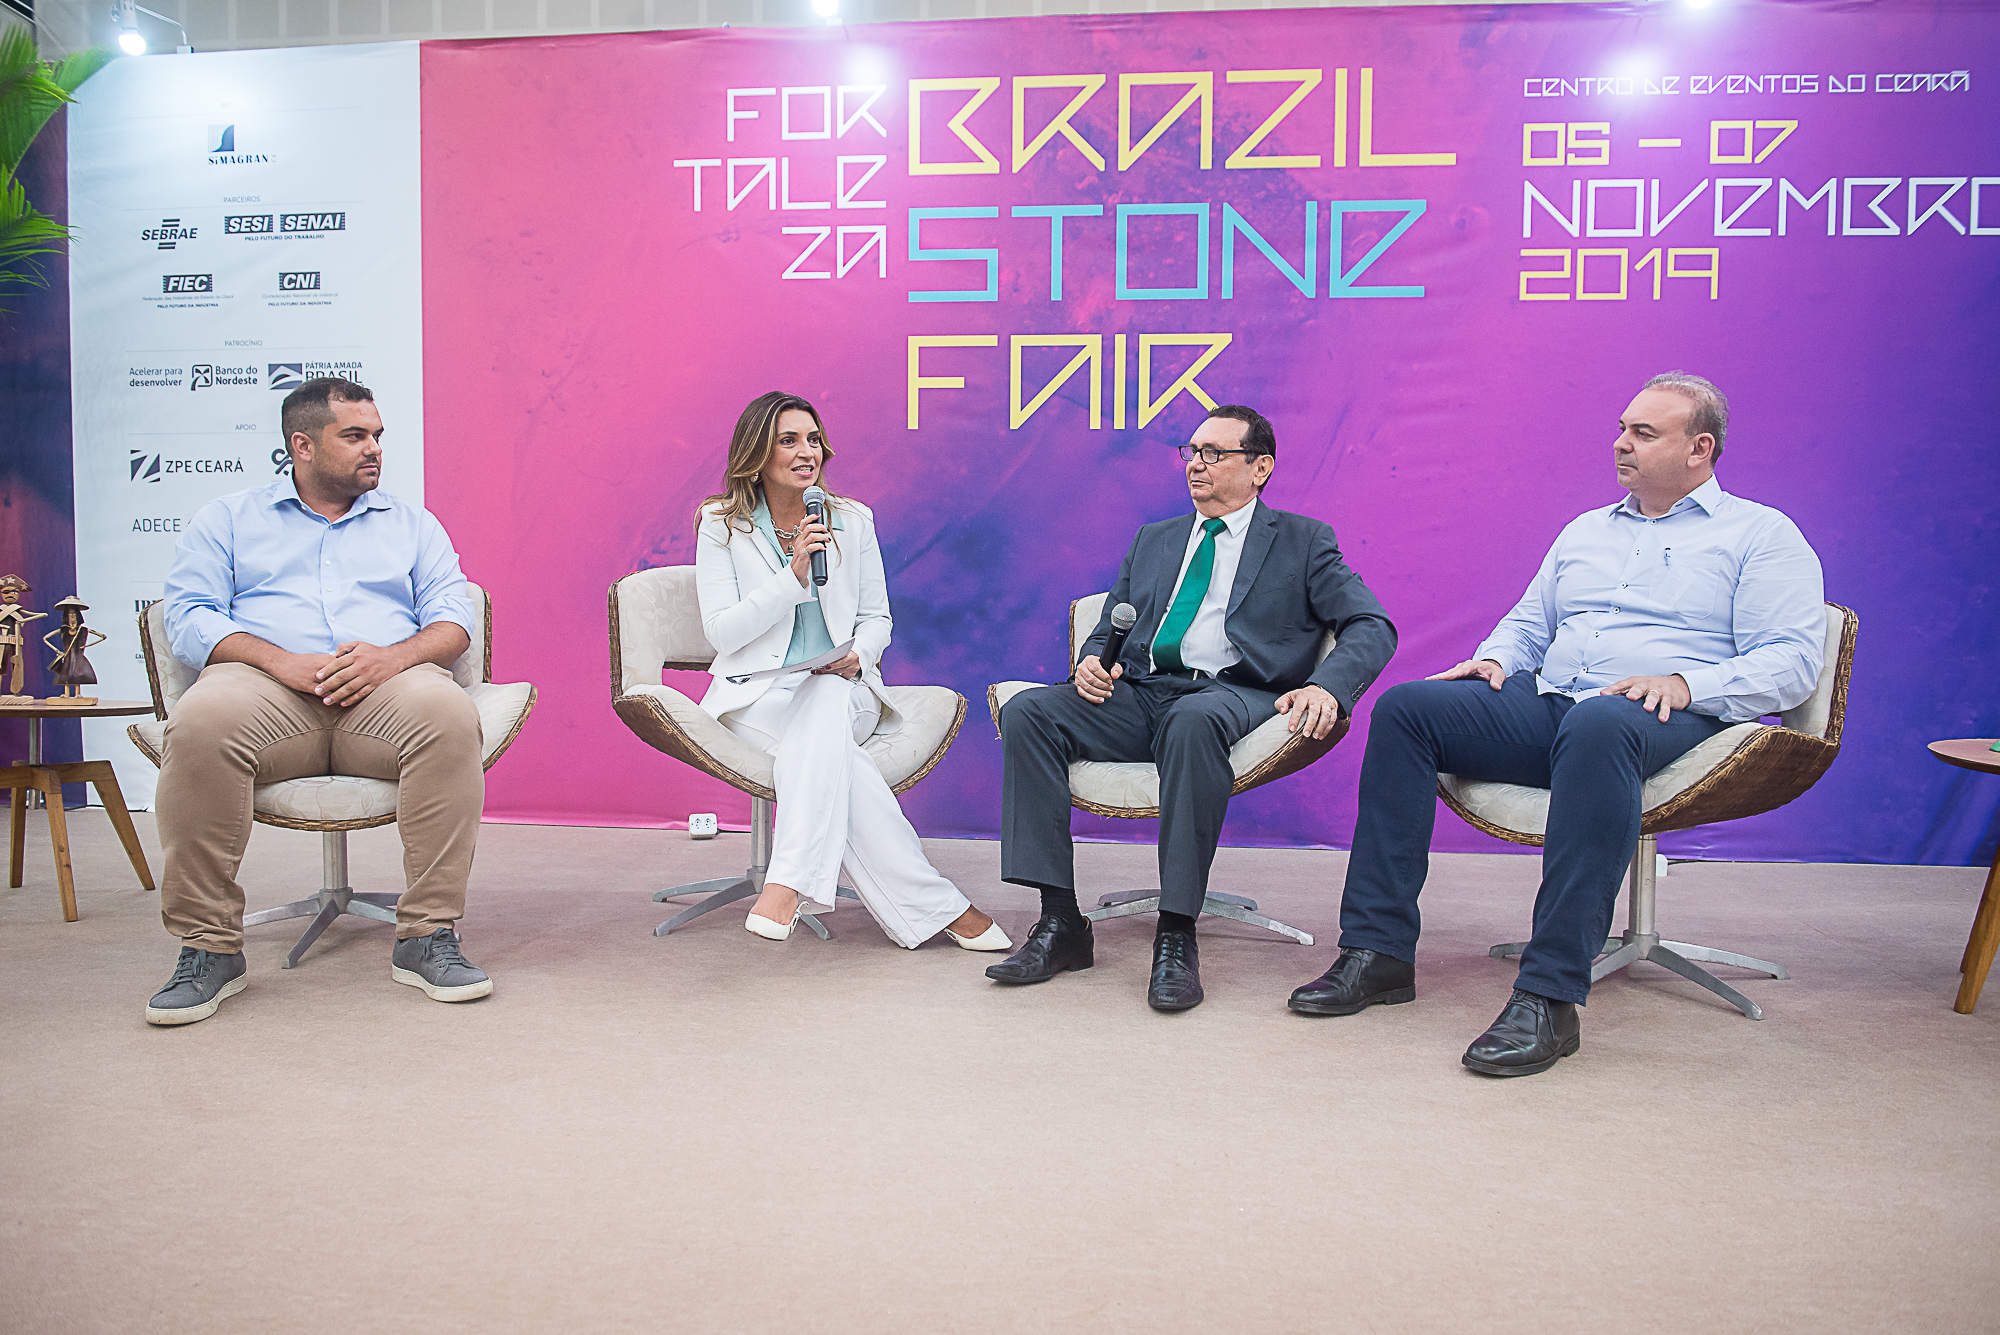 Fortaleza Brazil Stone Fair abre com talk comandado por Márcia Travessoni